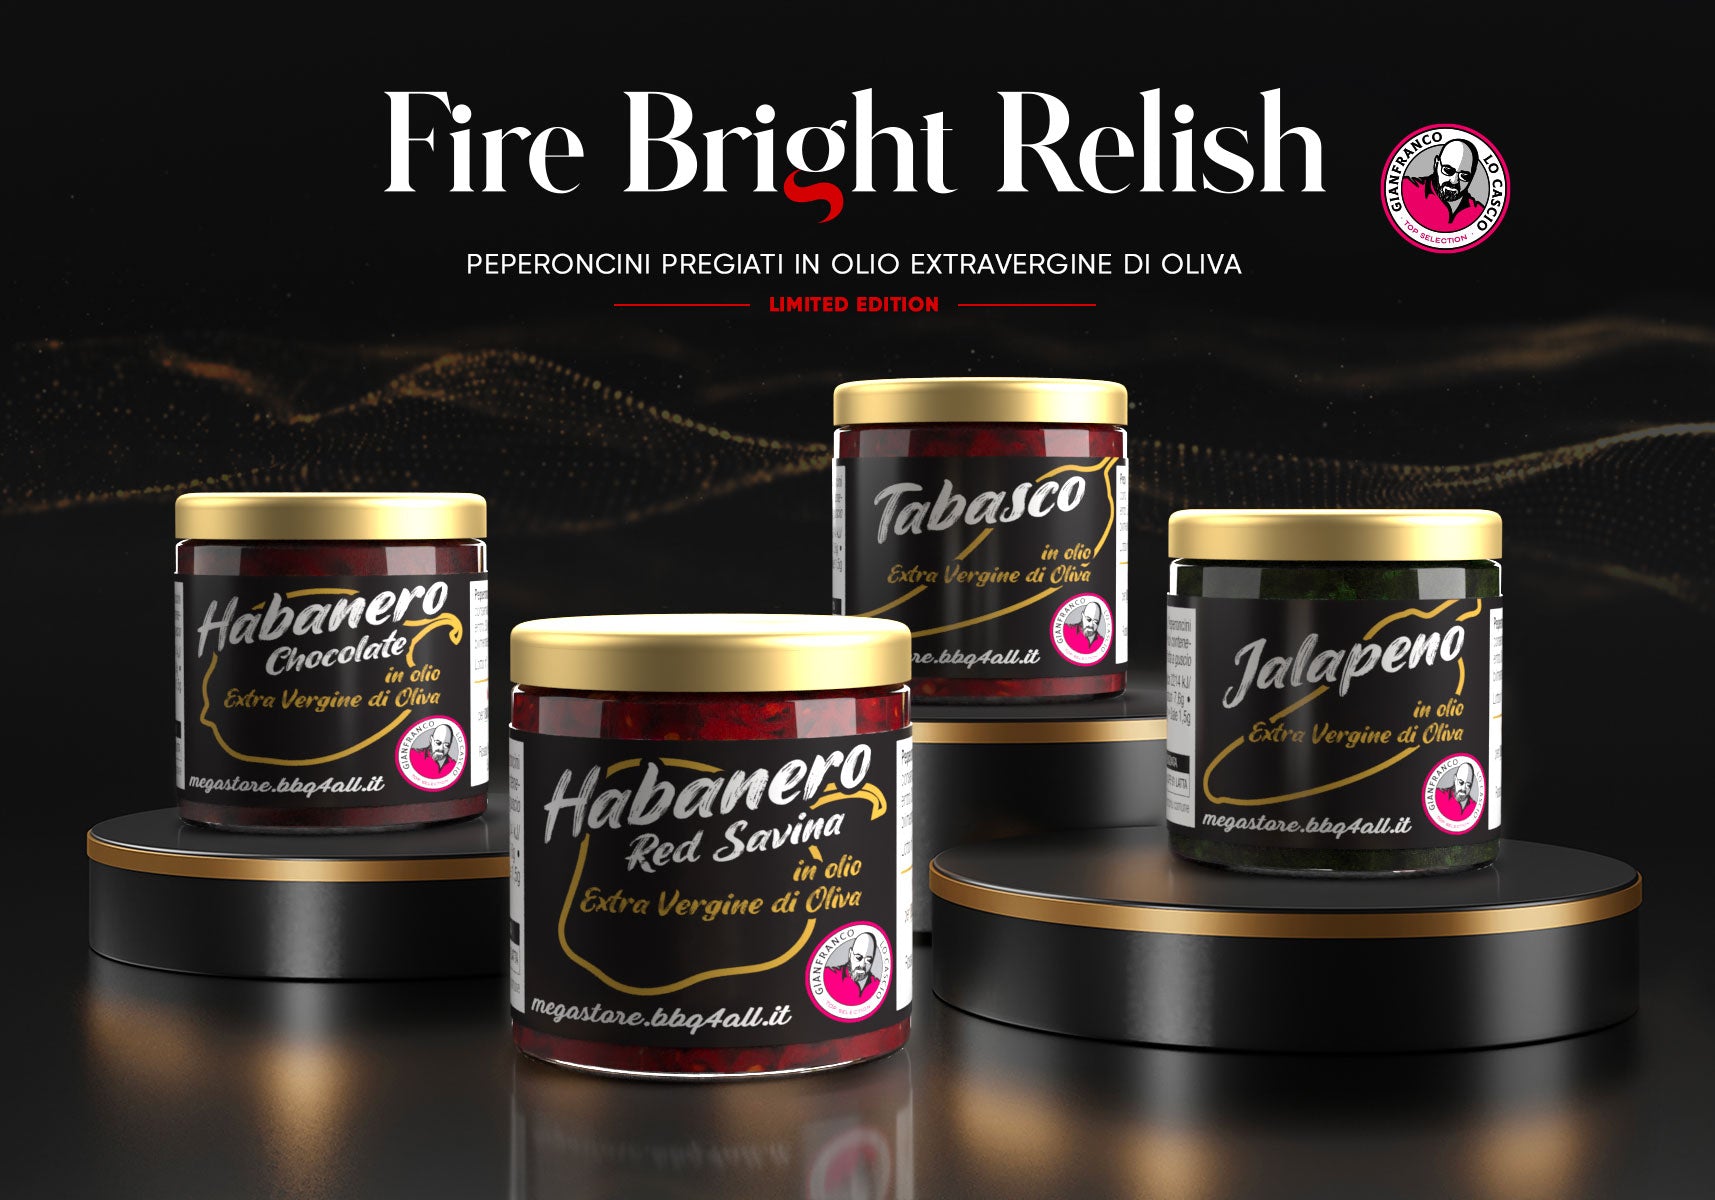 Fire Bright Relish - Habanero Chocolate 85g